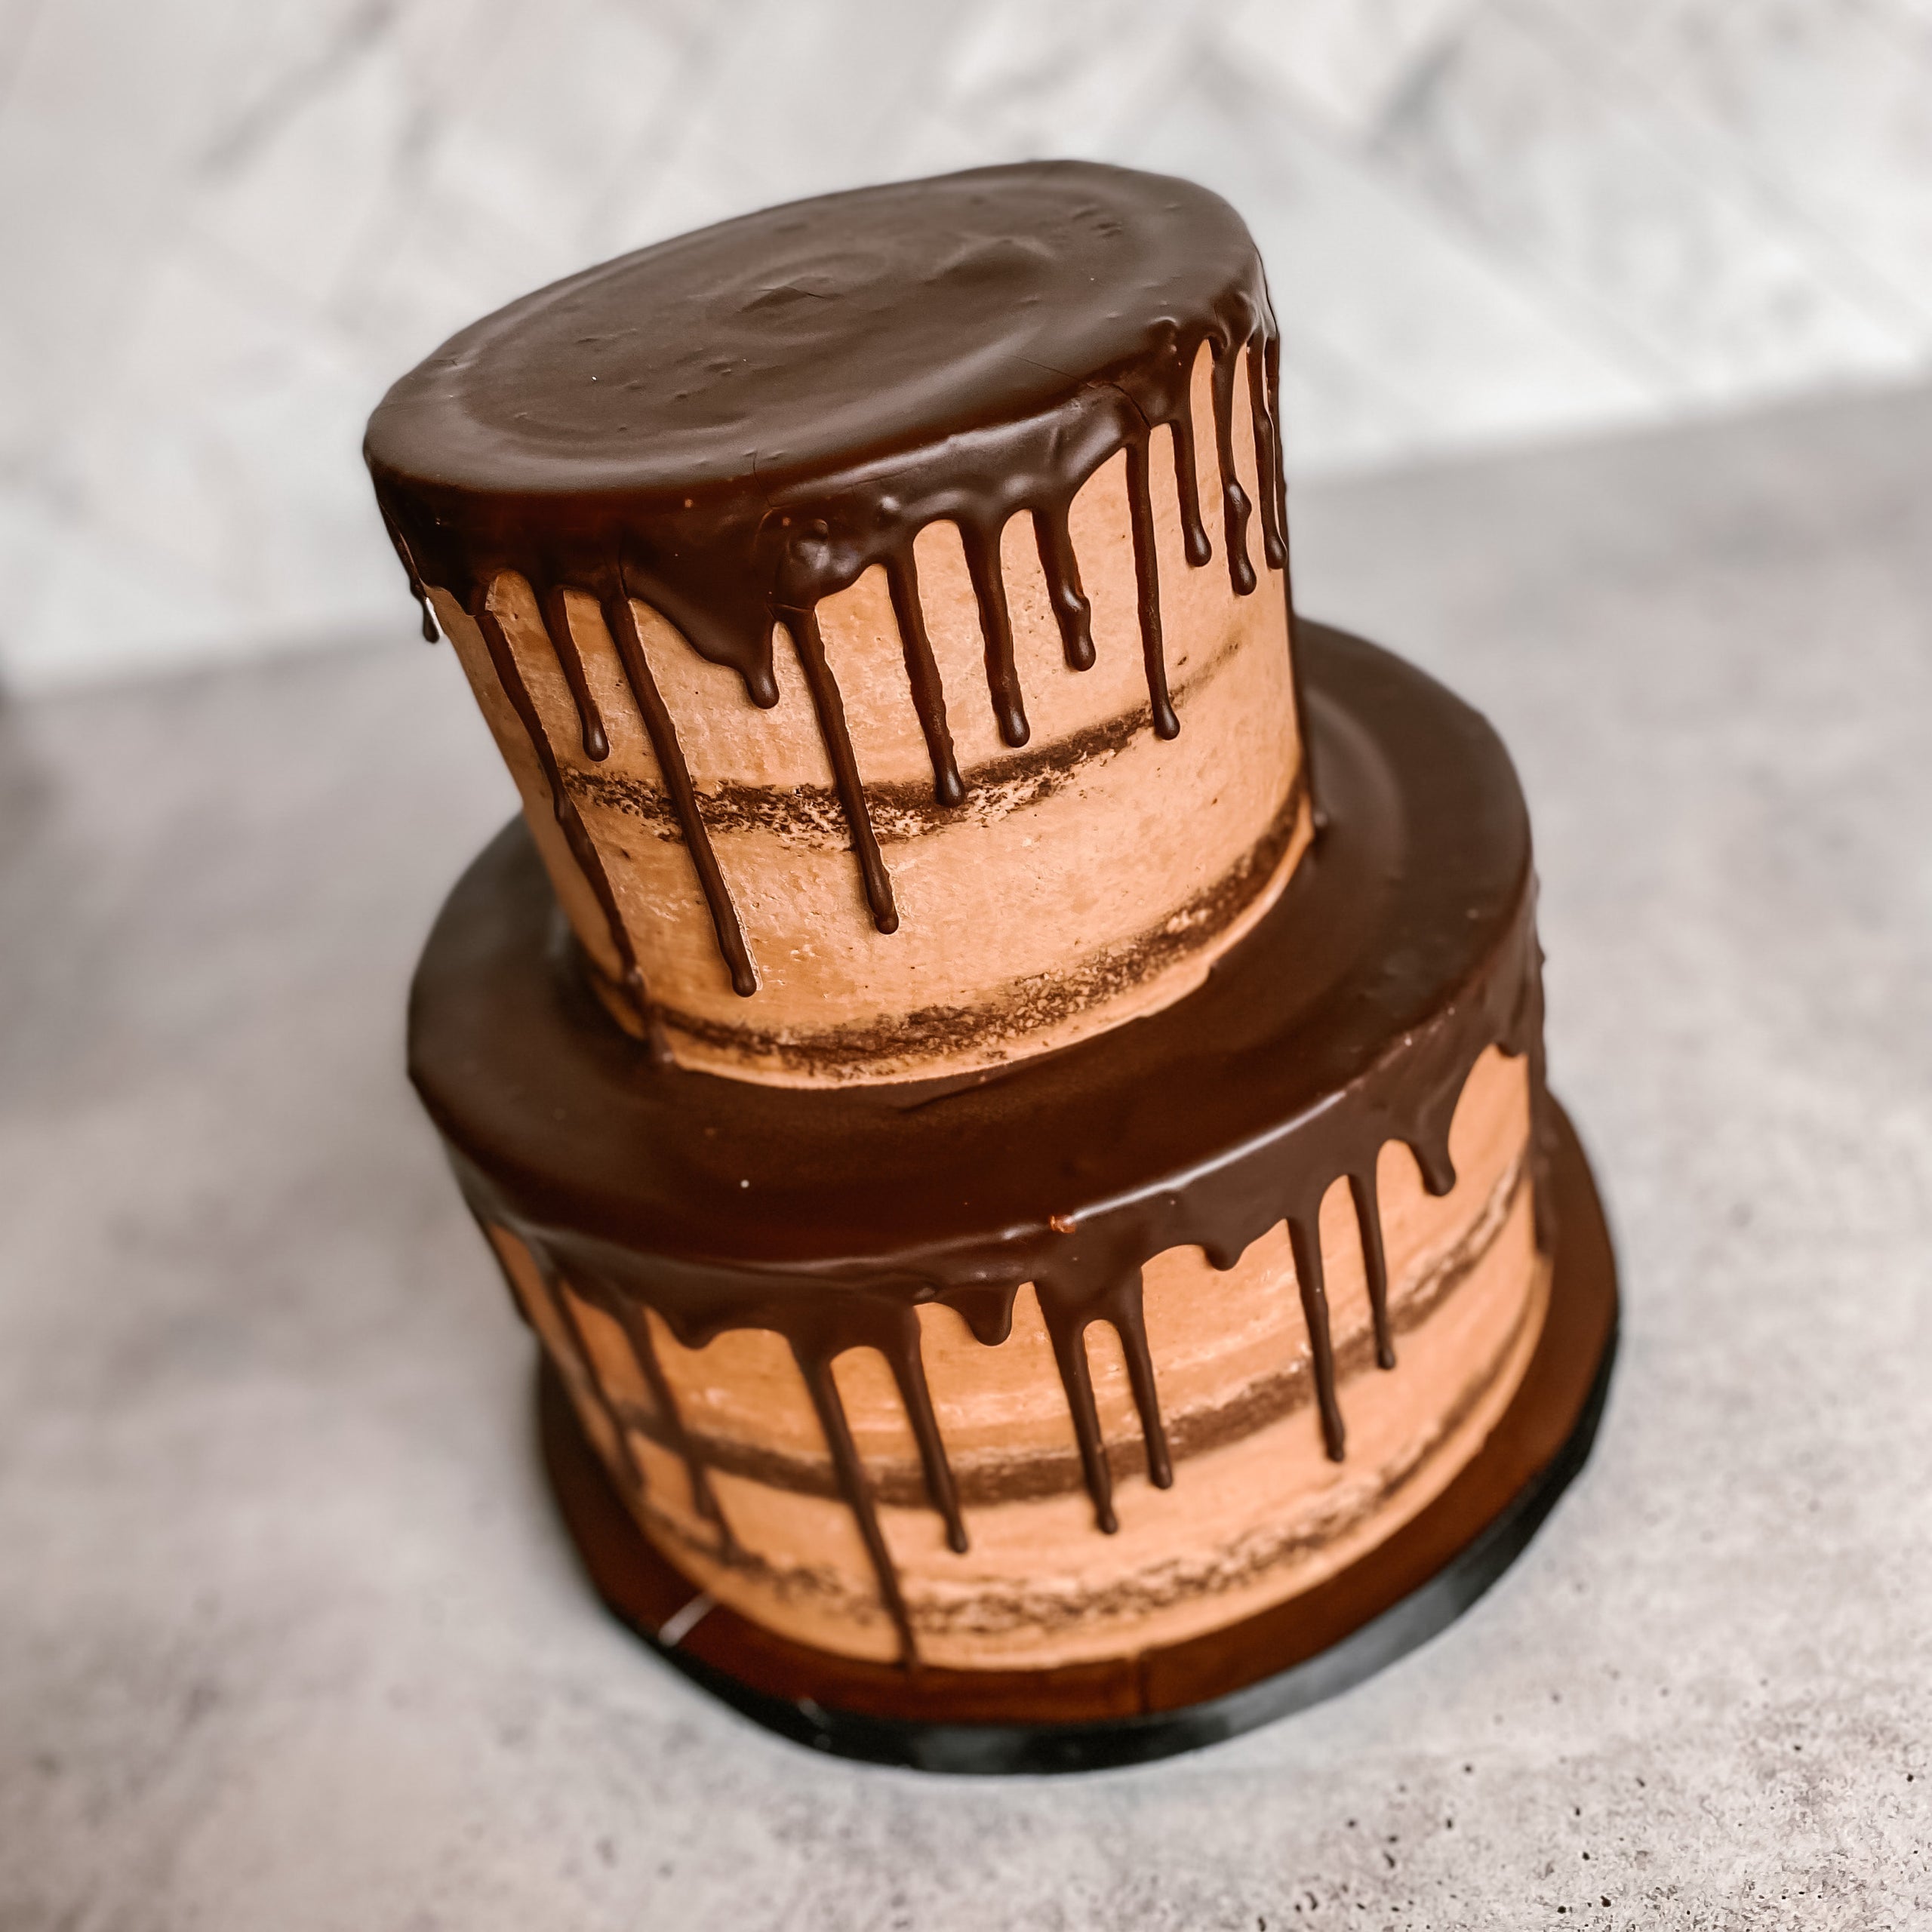 Two-Tier Chocolate Birthday Cake